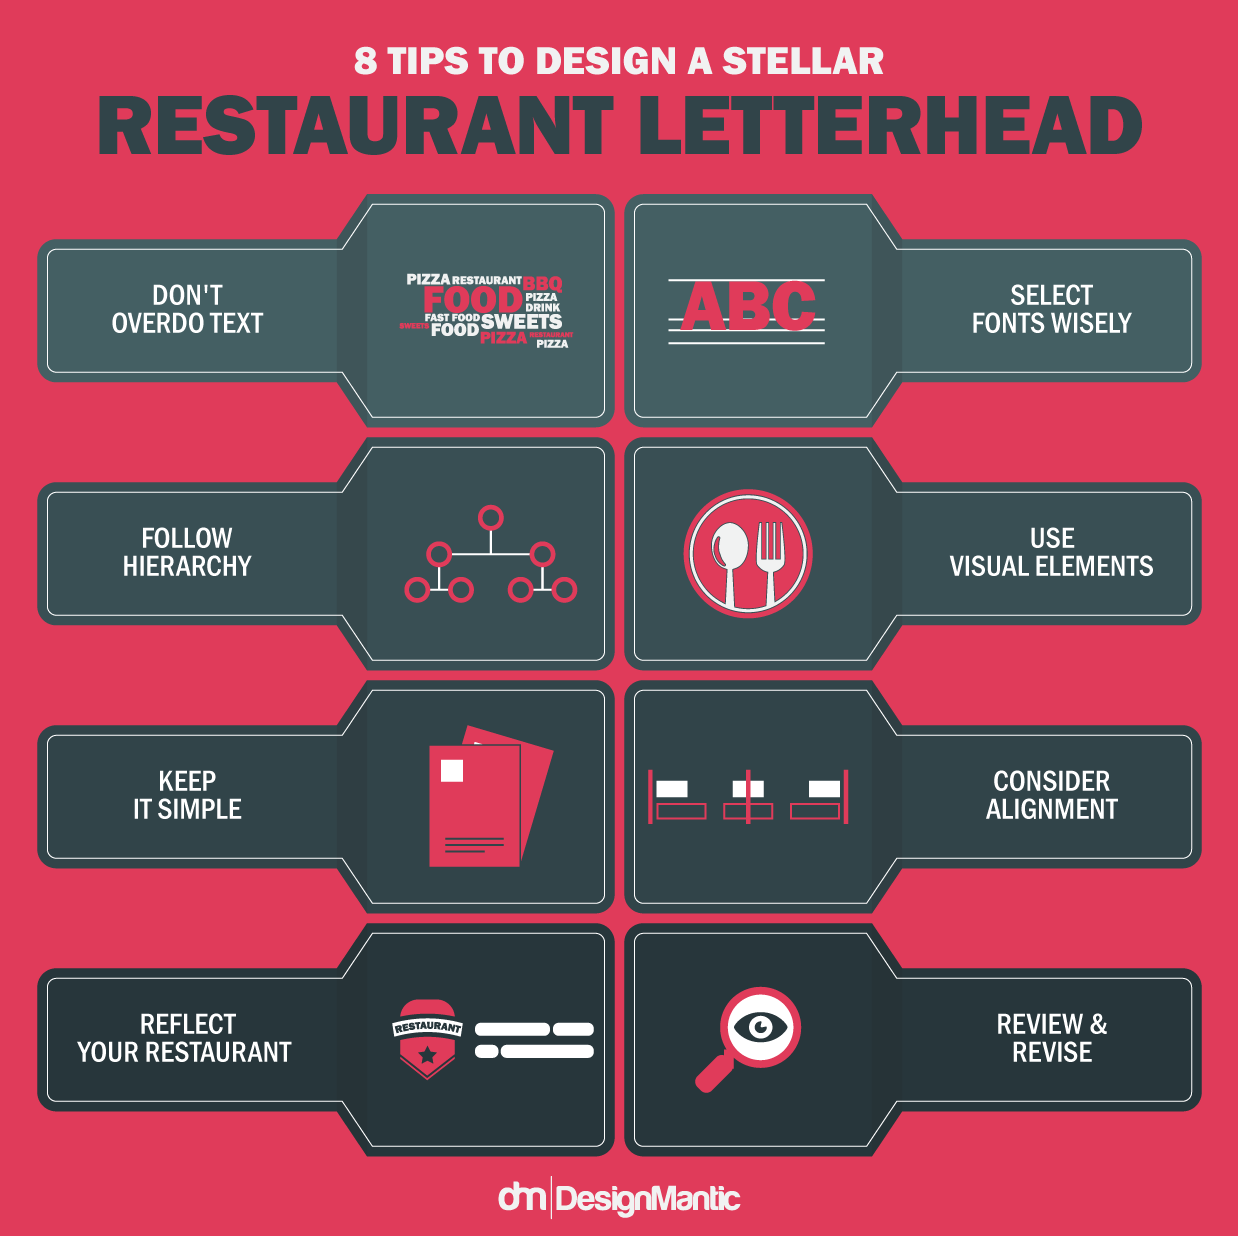 Stellar Restaurant Letterhead